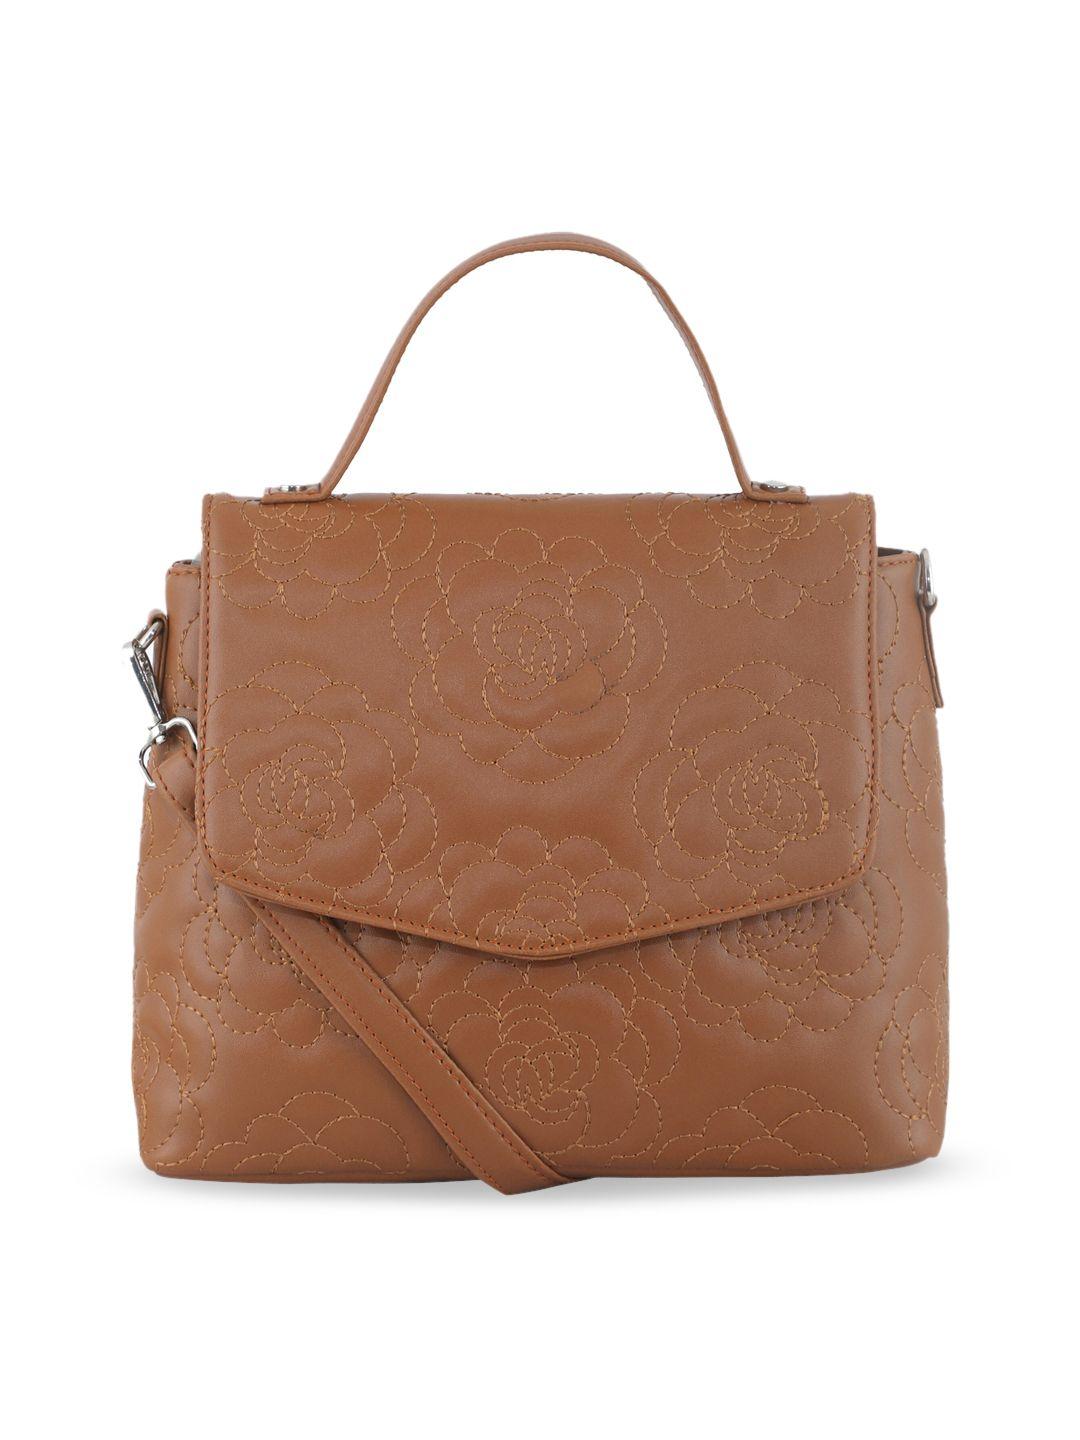 toteteca tan brown floral textured structured satchel